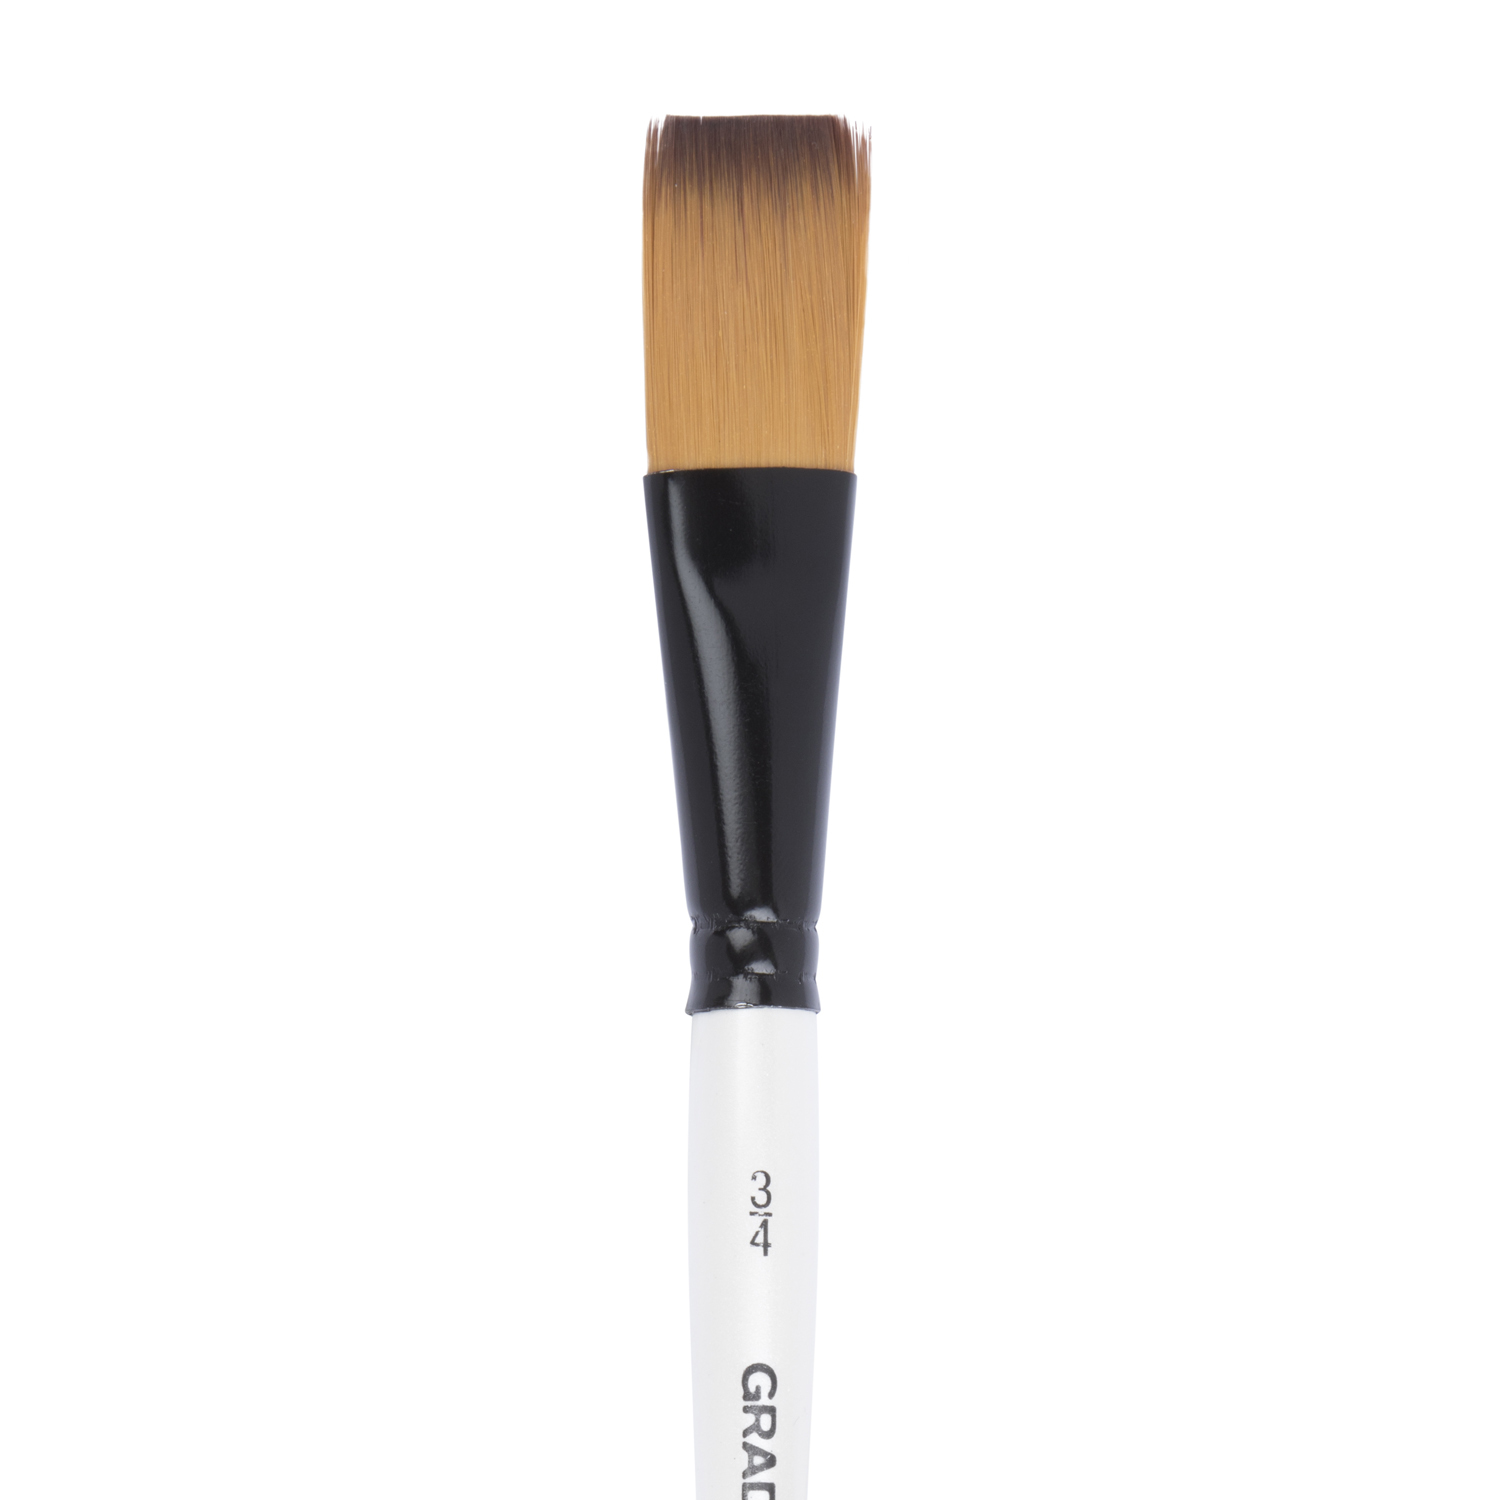 Daler-Rowney Graduate Synthetic One Stroke Short Handle Brush Image 1